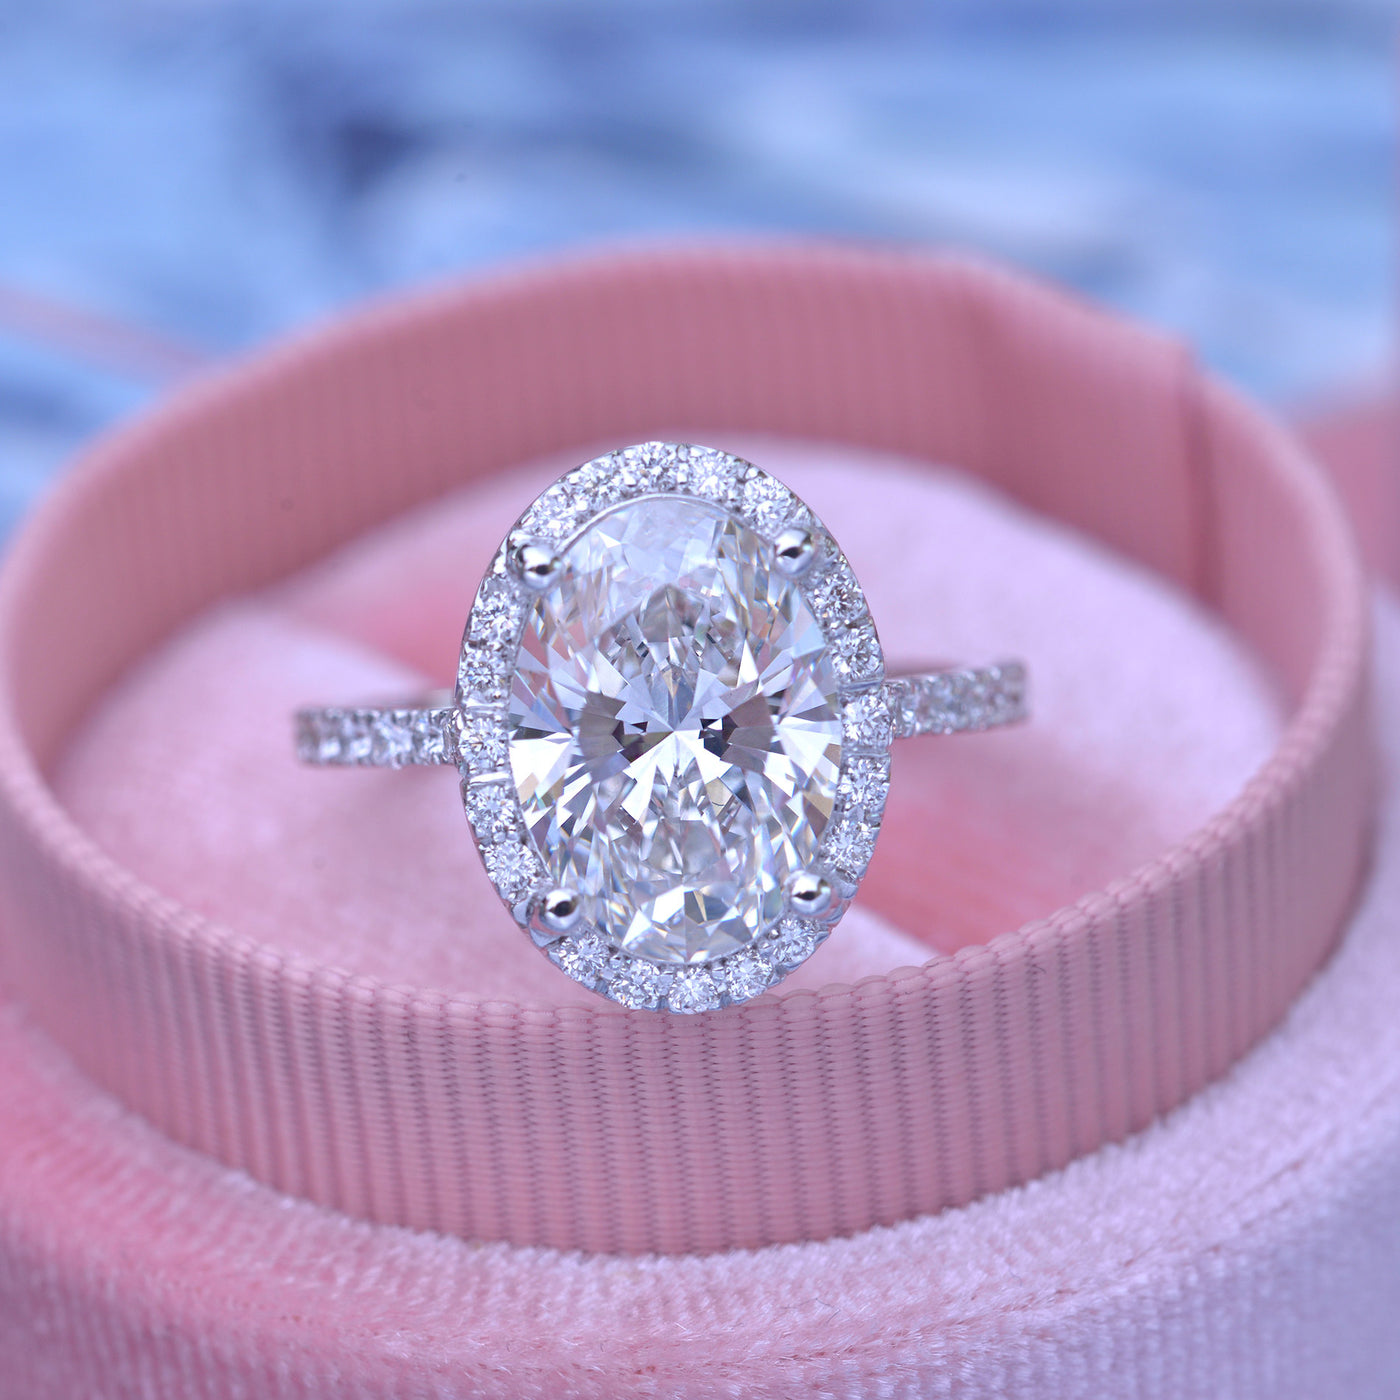 Fantastically Oval Shape Diamond Wedding Ring